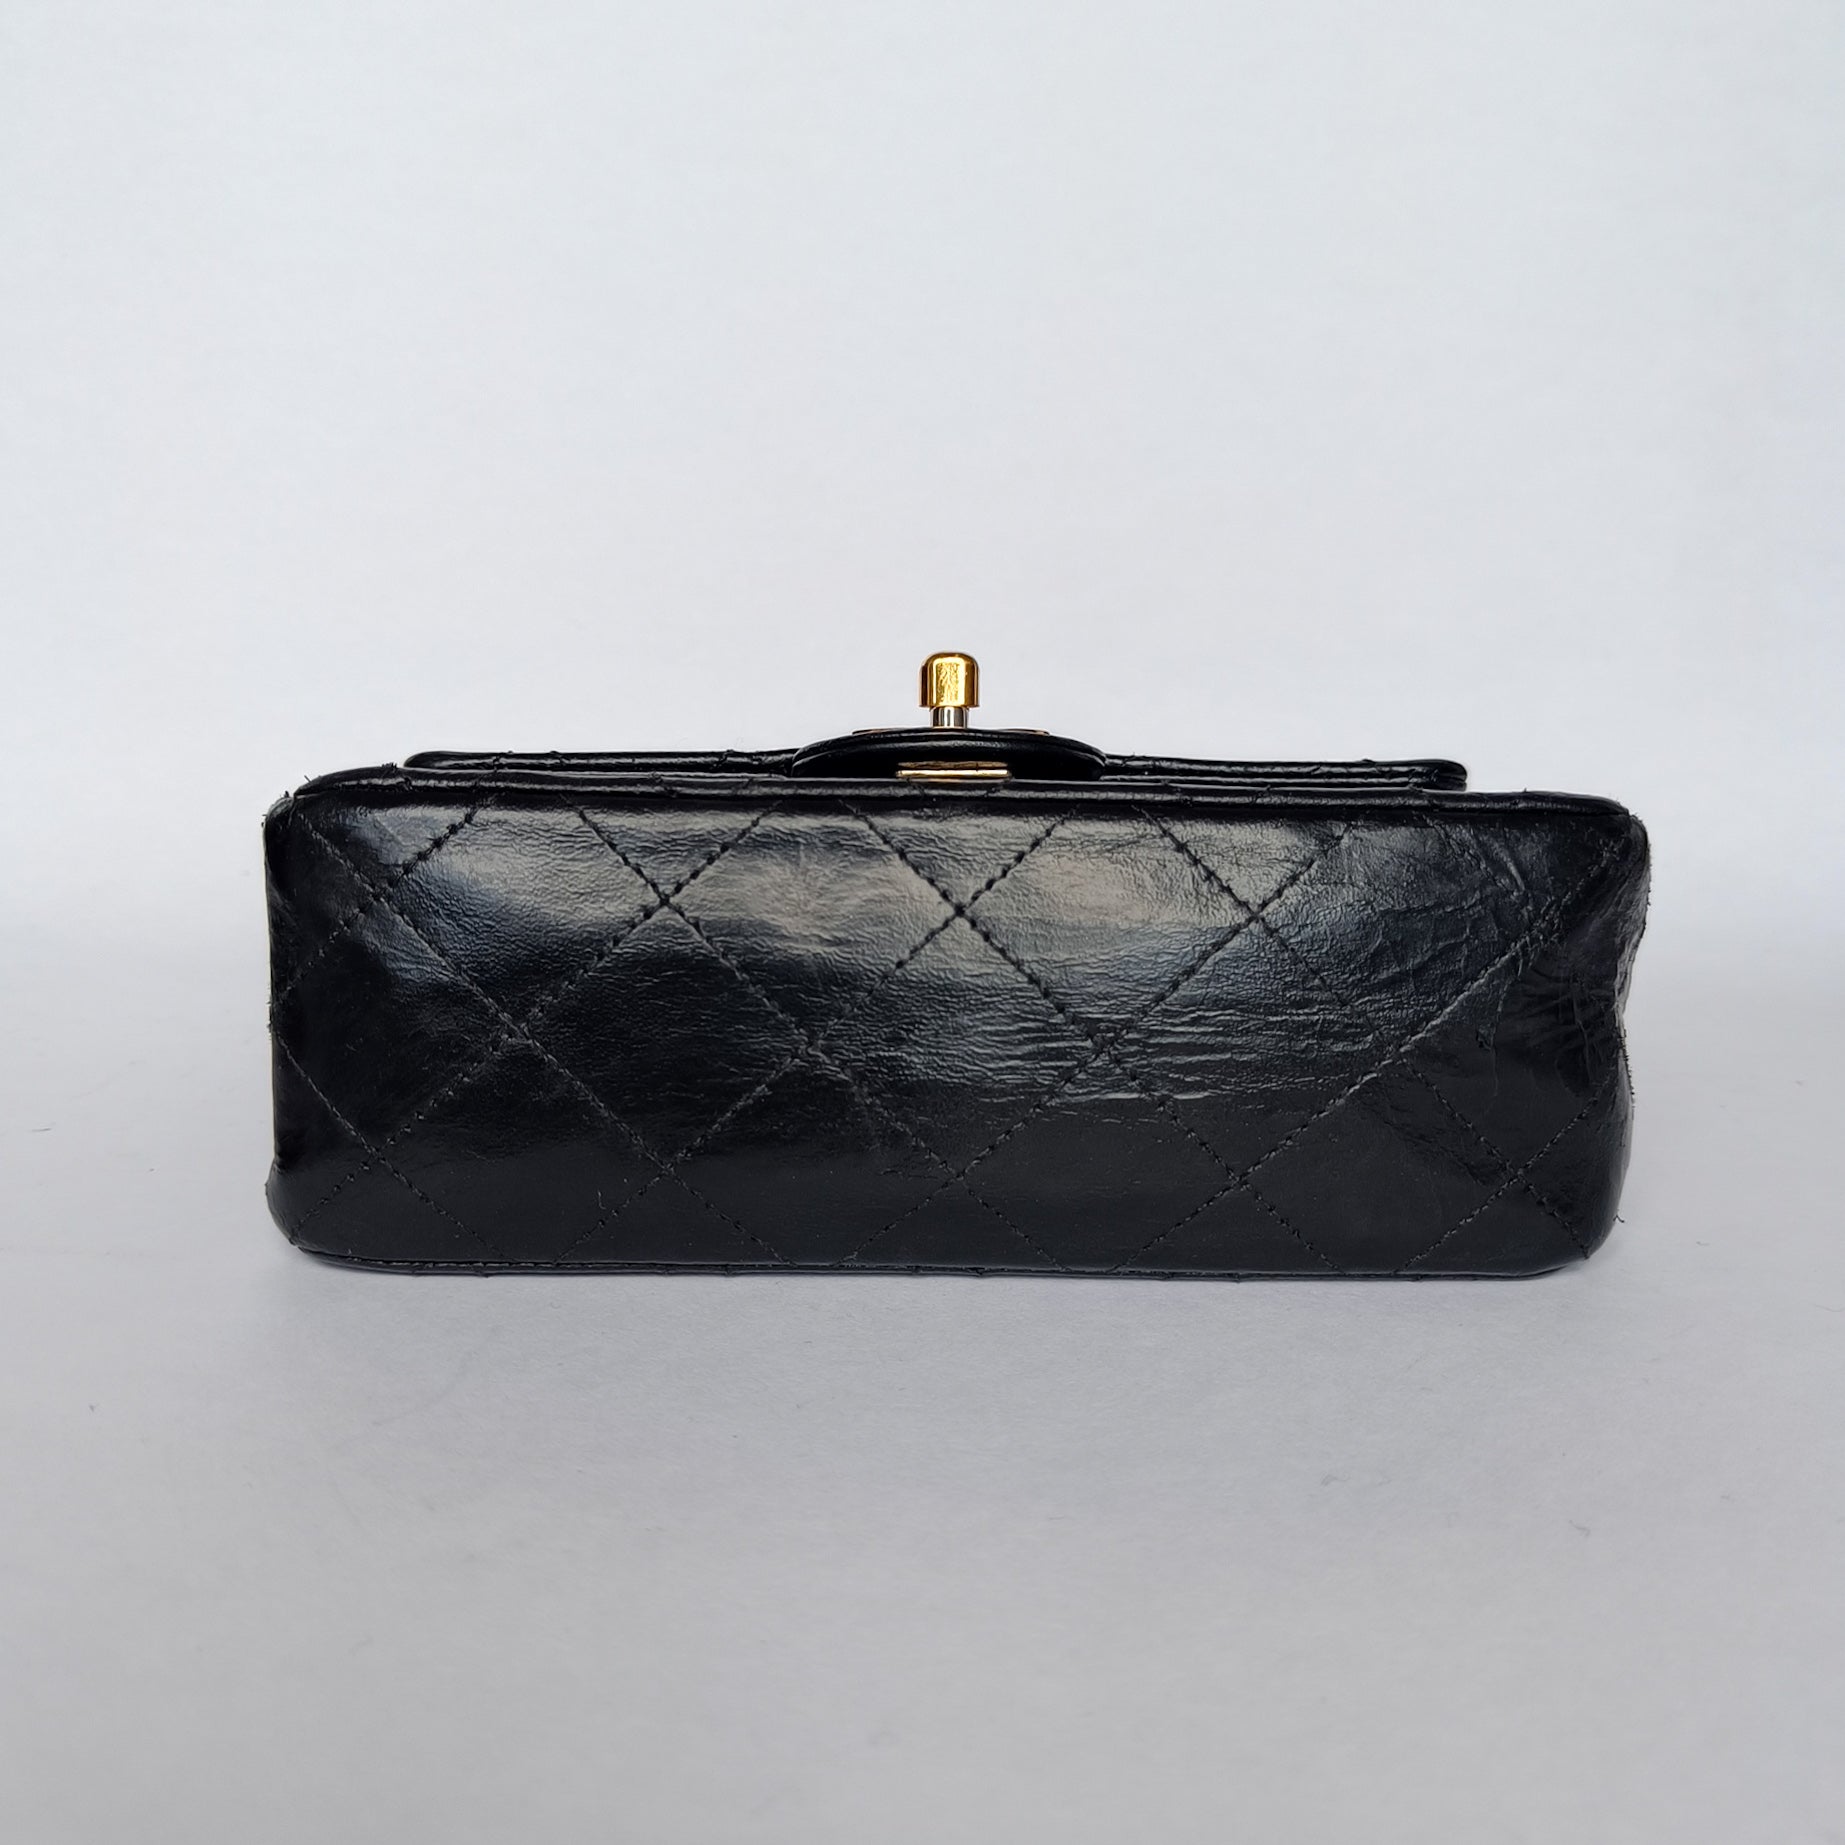 KACAINJOY Black Soft Leather Small Crossbody Bags Purses Belt Bag for Women  Quilted Chain Shoulder Bag Lady Casual Lattice Handbag: Handbags